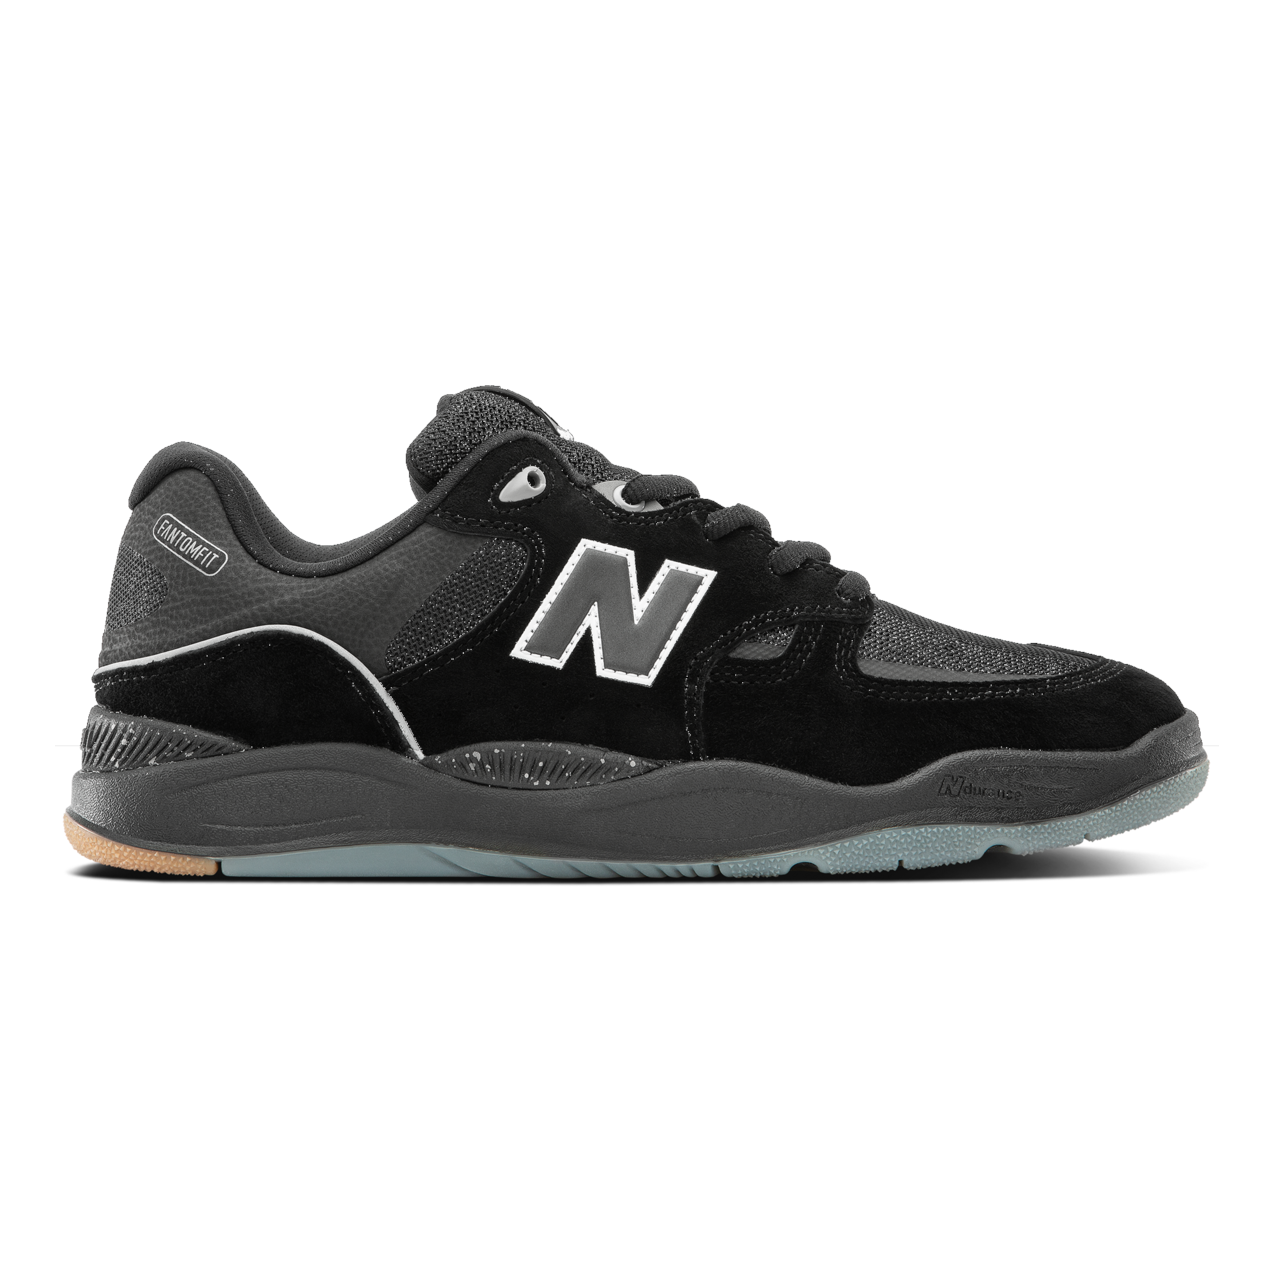 Tiago Lemos NM1010 Black New Balance Numeric Pro Skateboard Shoe